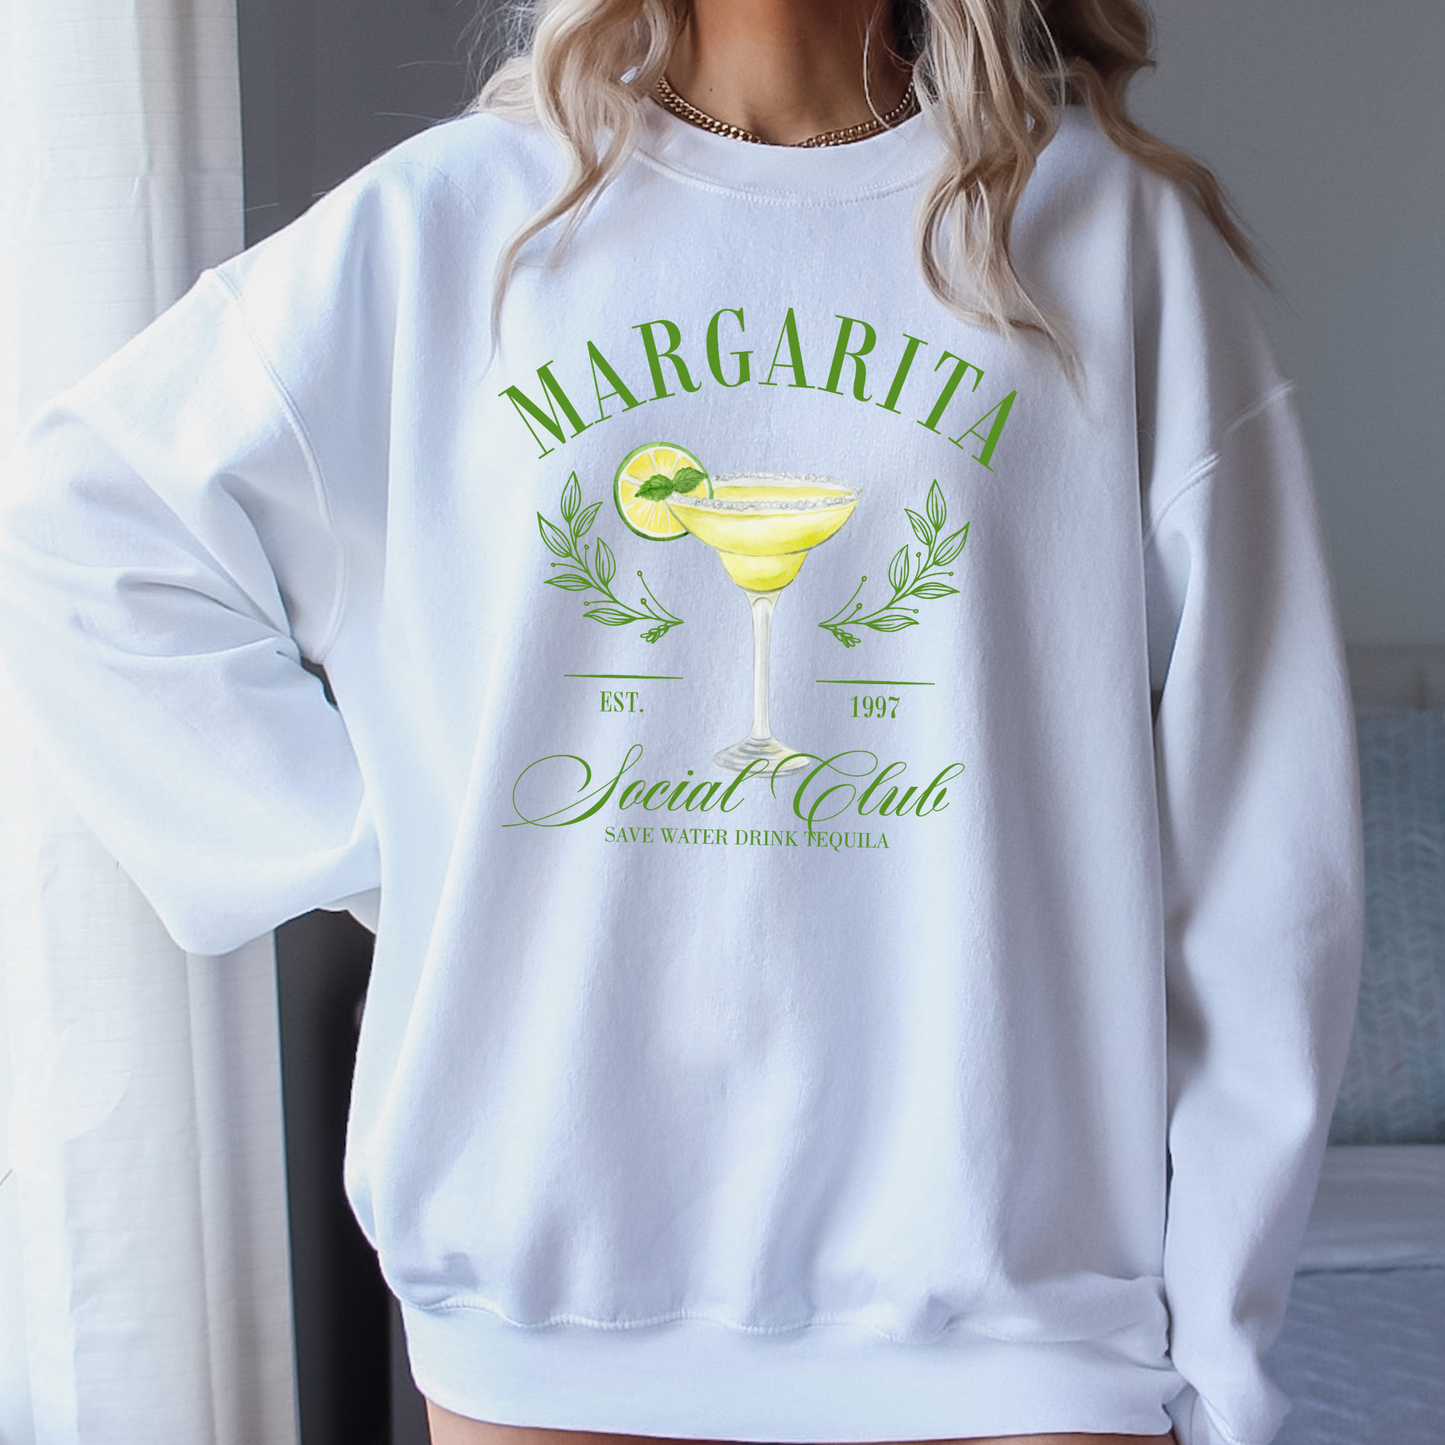 Margarita Social Club Sweatshirt